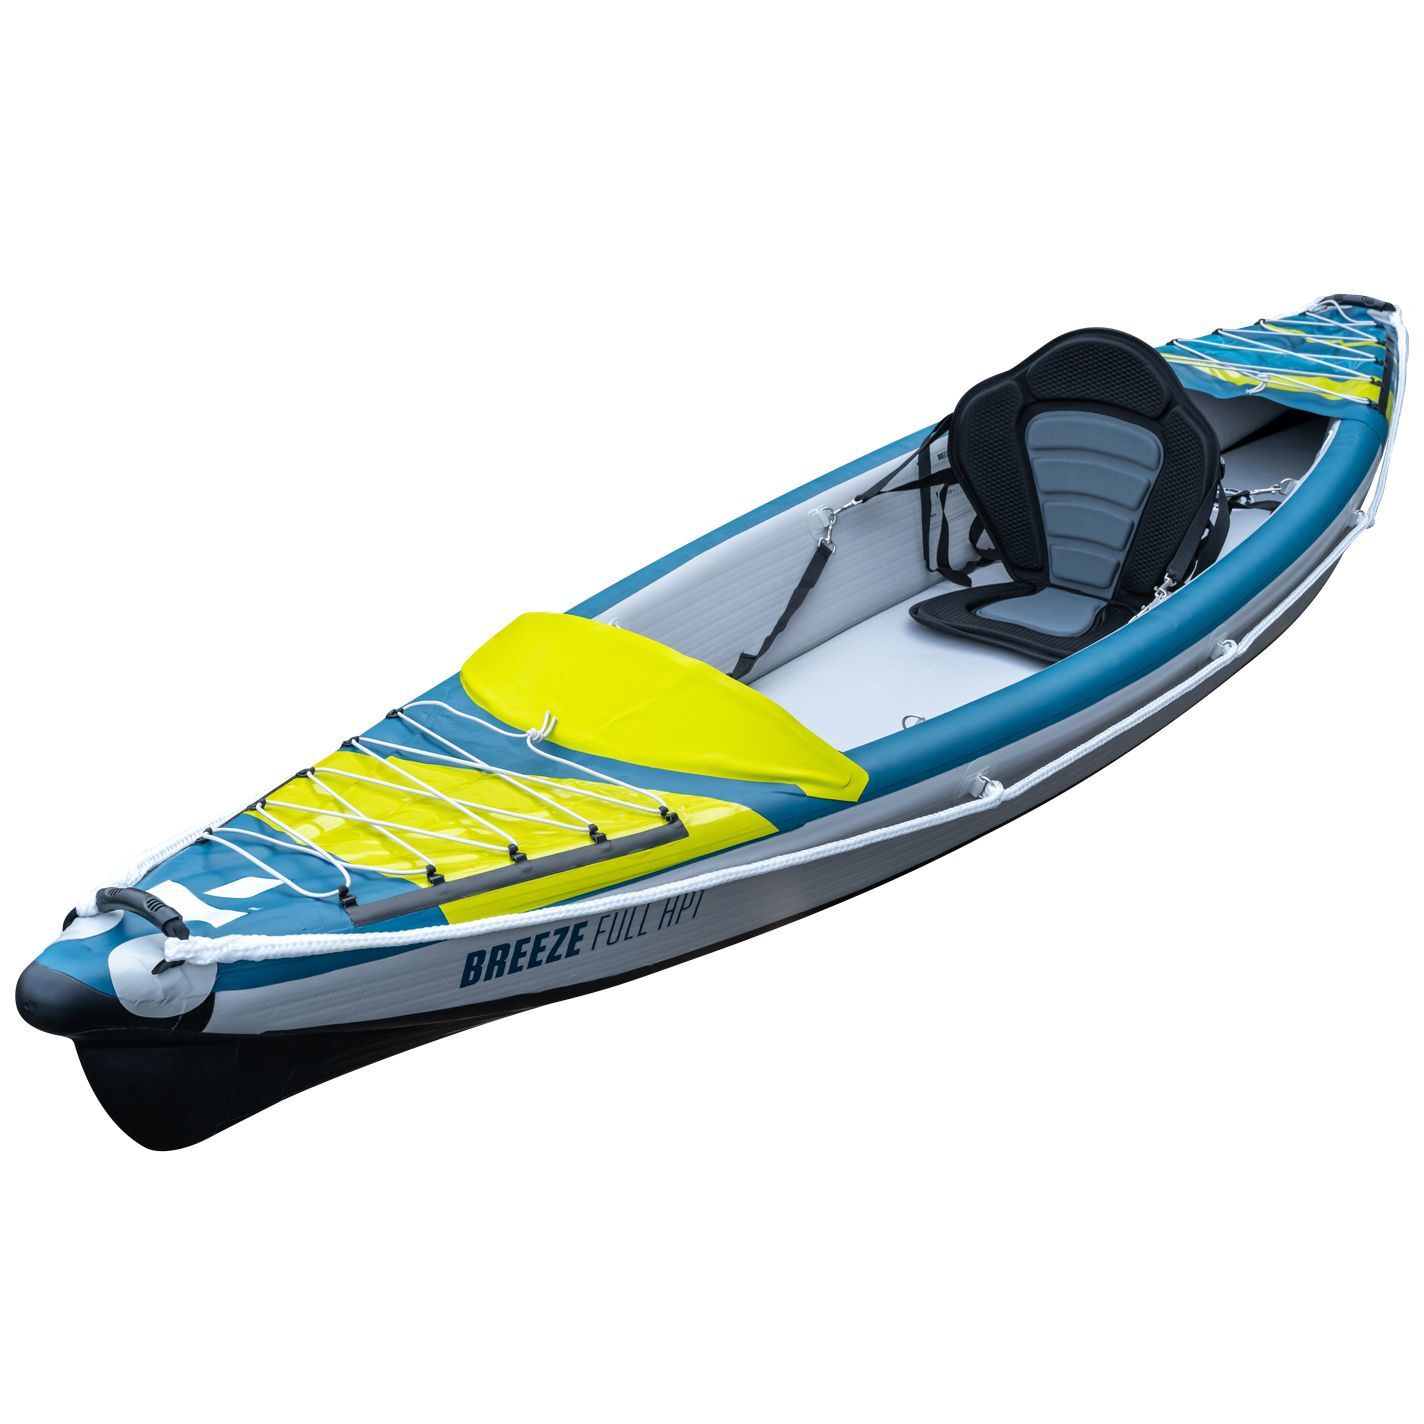 Tahe Outdoor Kayak Air Breeze Full Hp1 - Uppblåsbar kajak